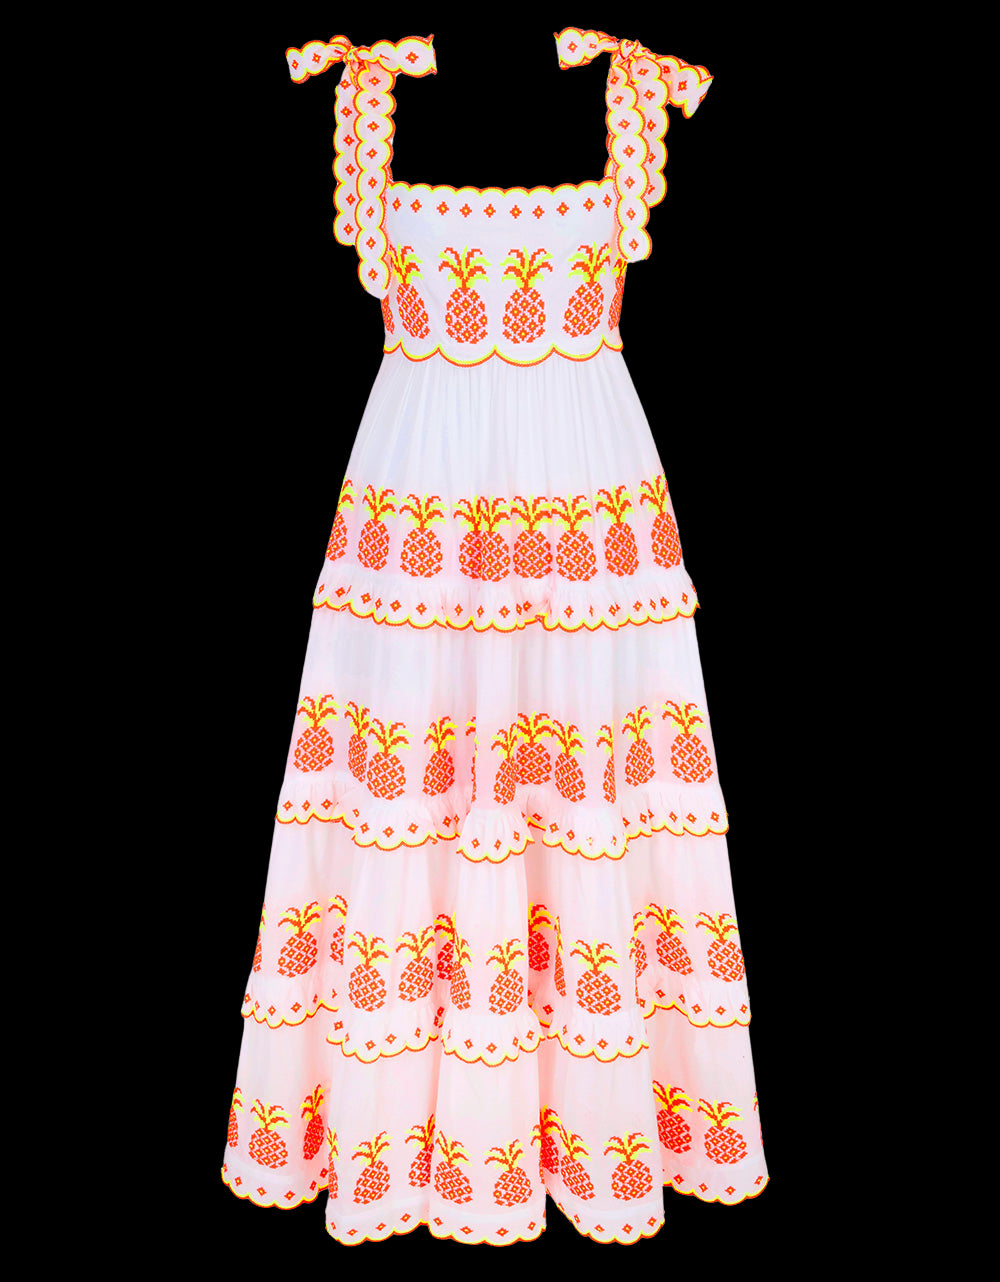 Pineapple Cross Stitch Athens Dress